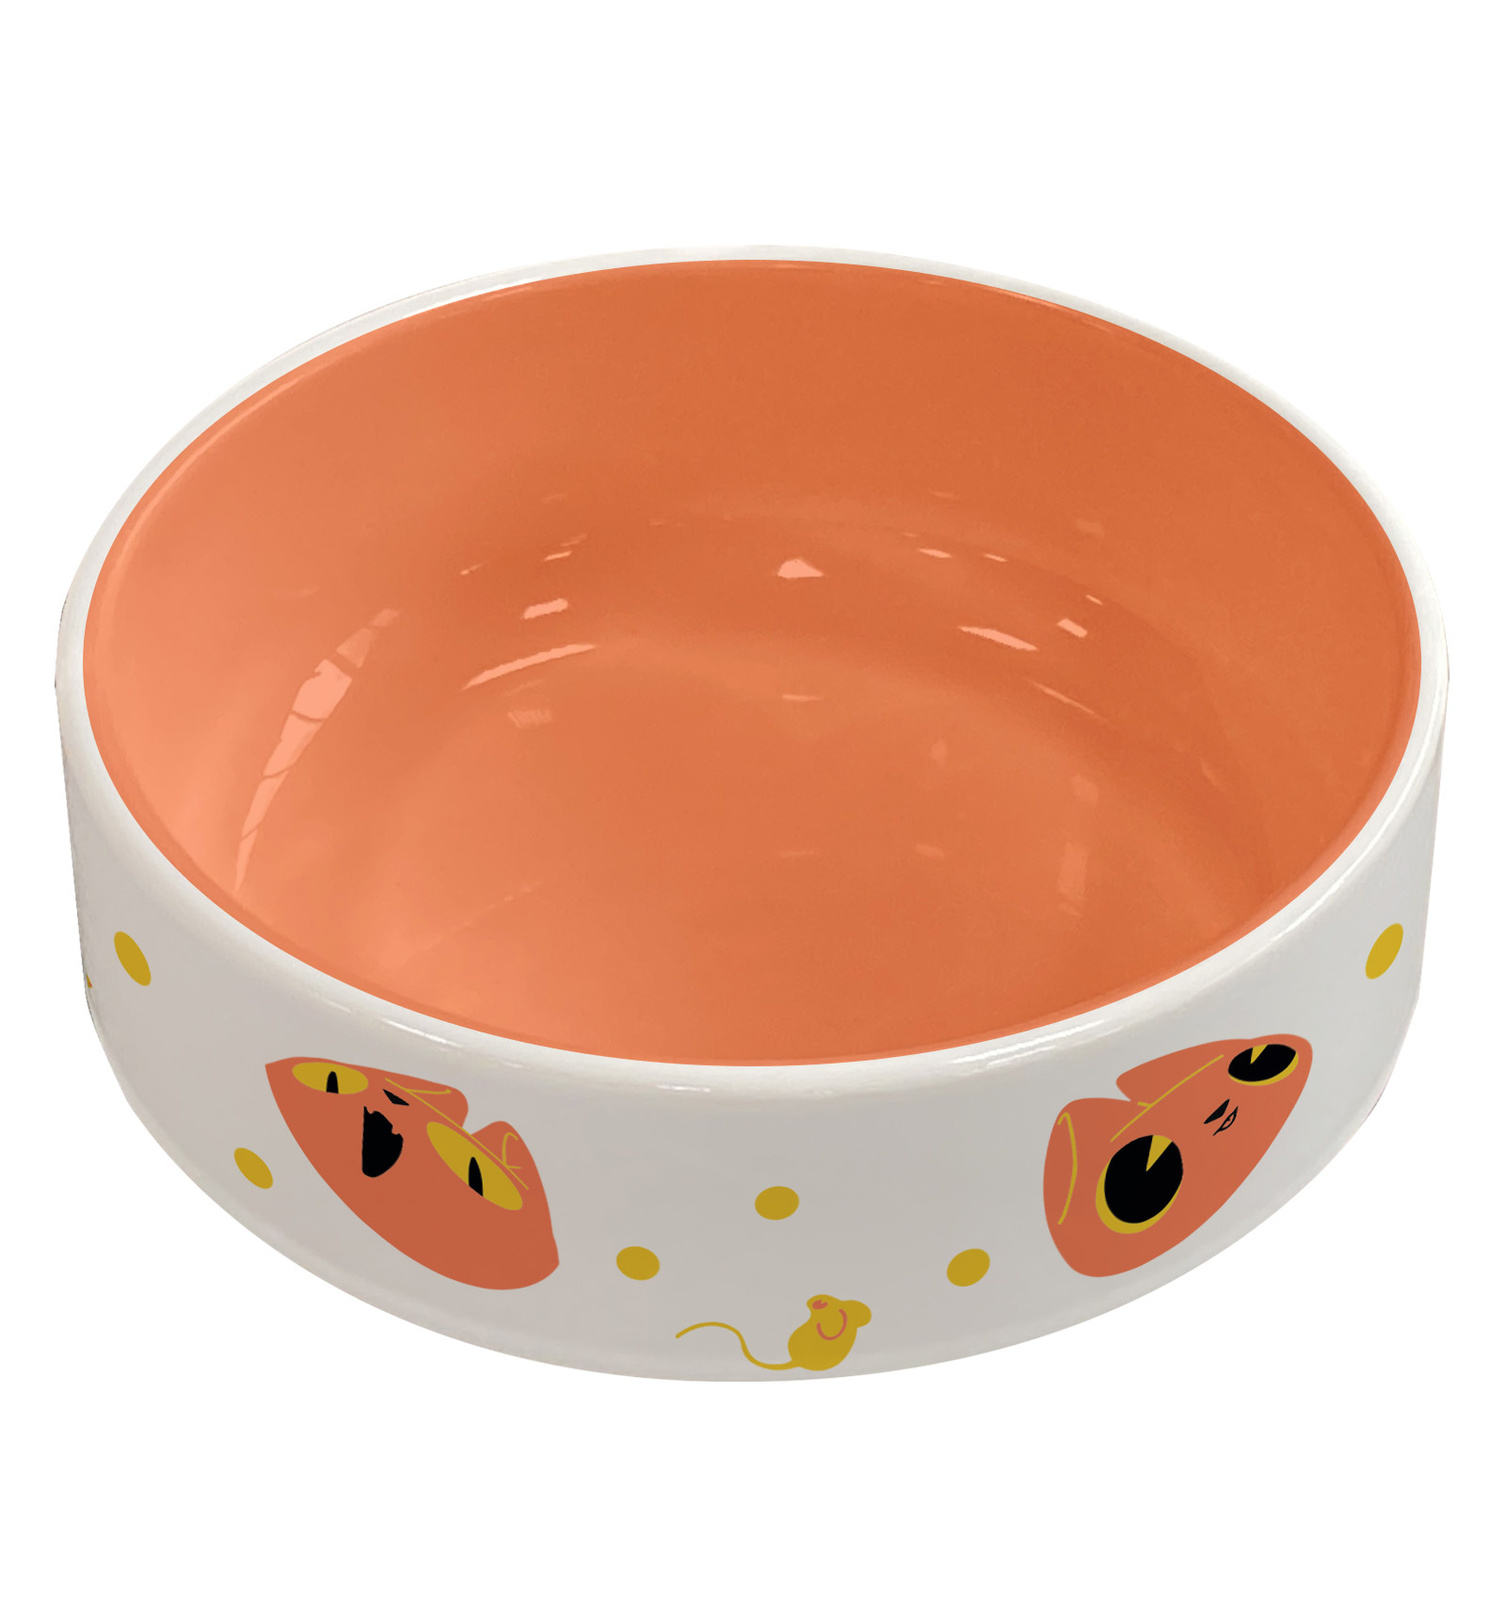 Tappi миски Tappi миски керамическая миска для кошек, оранжевая (350 мл)